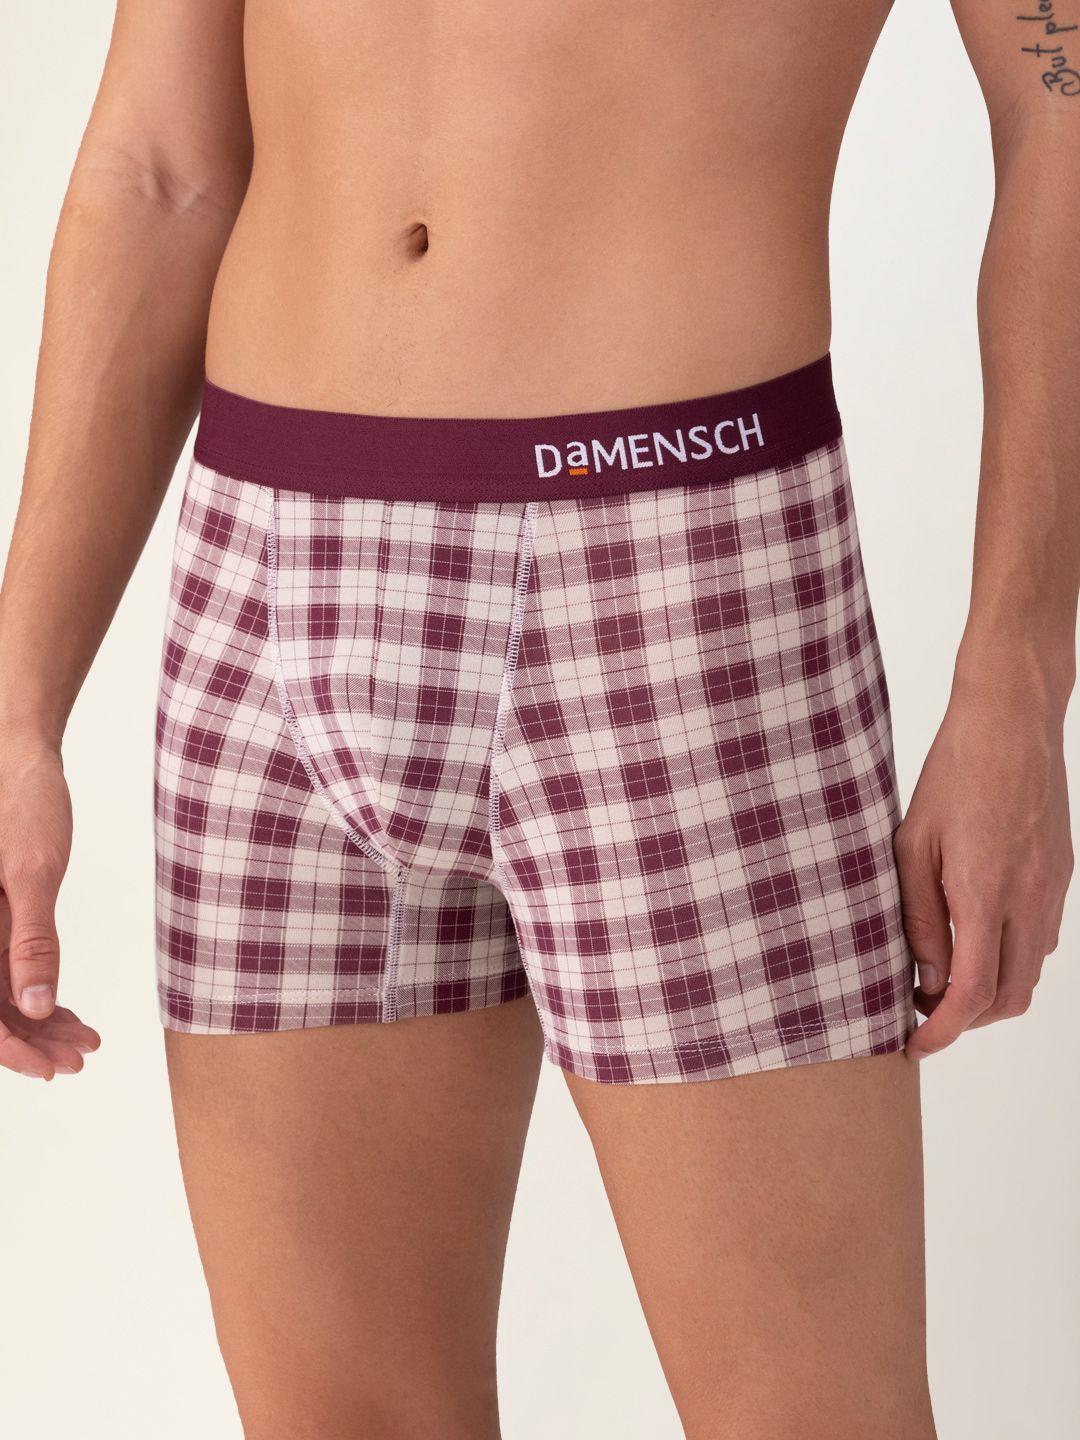 damensch men anti bacterial checked deo-soft deodorizing trunk